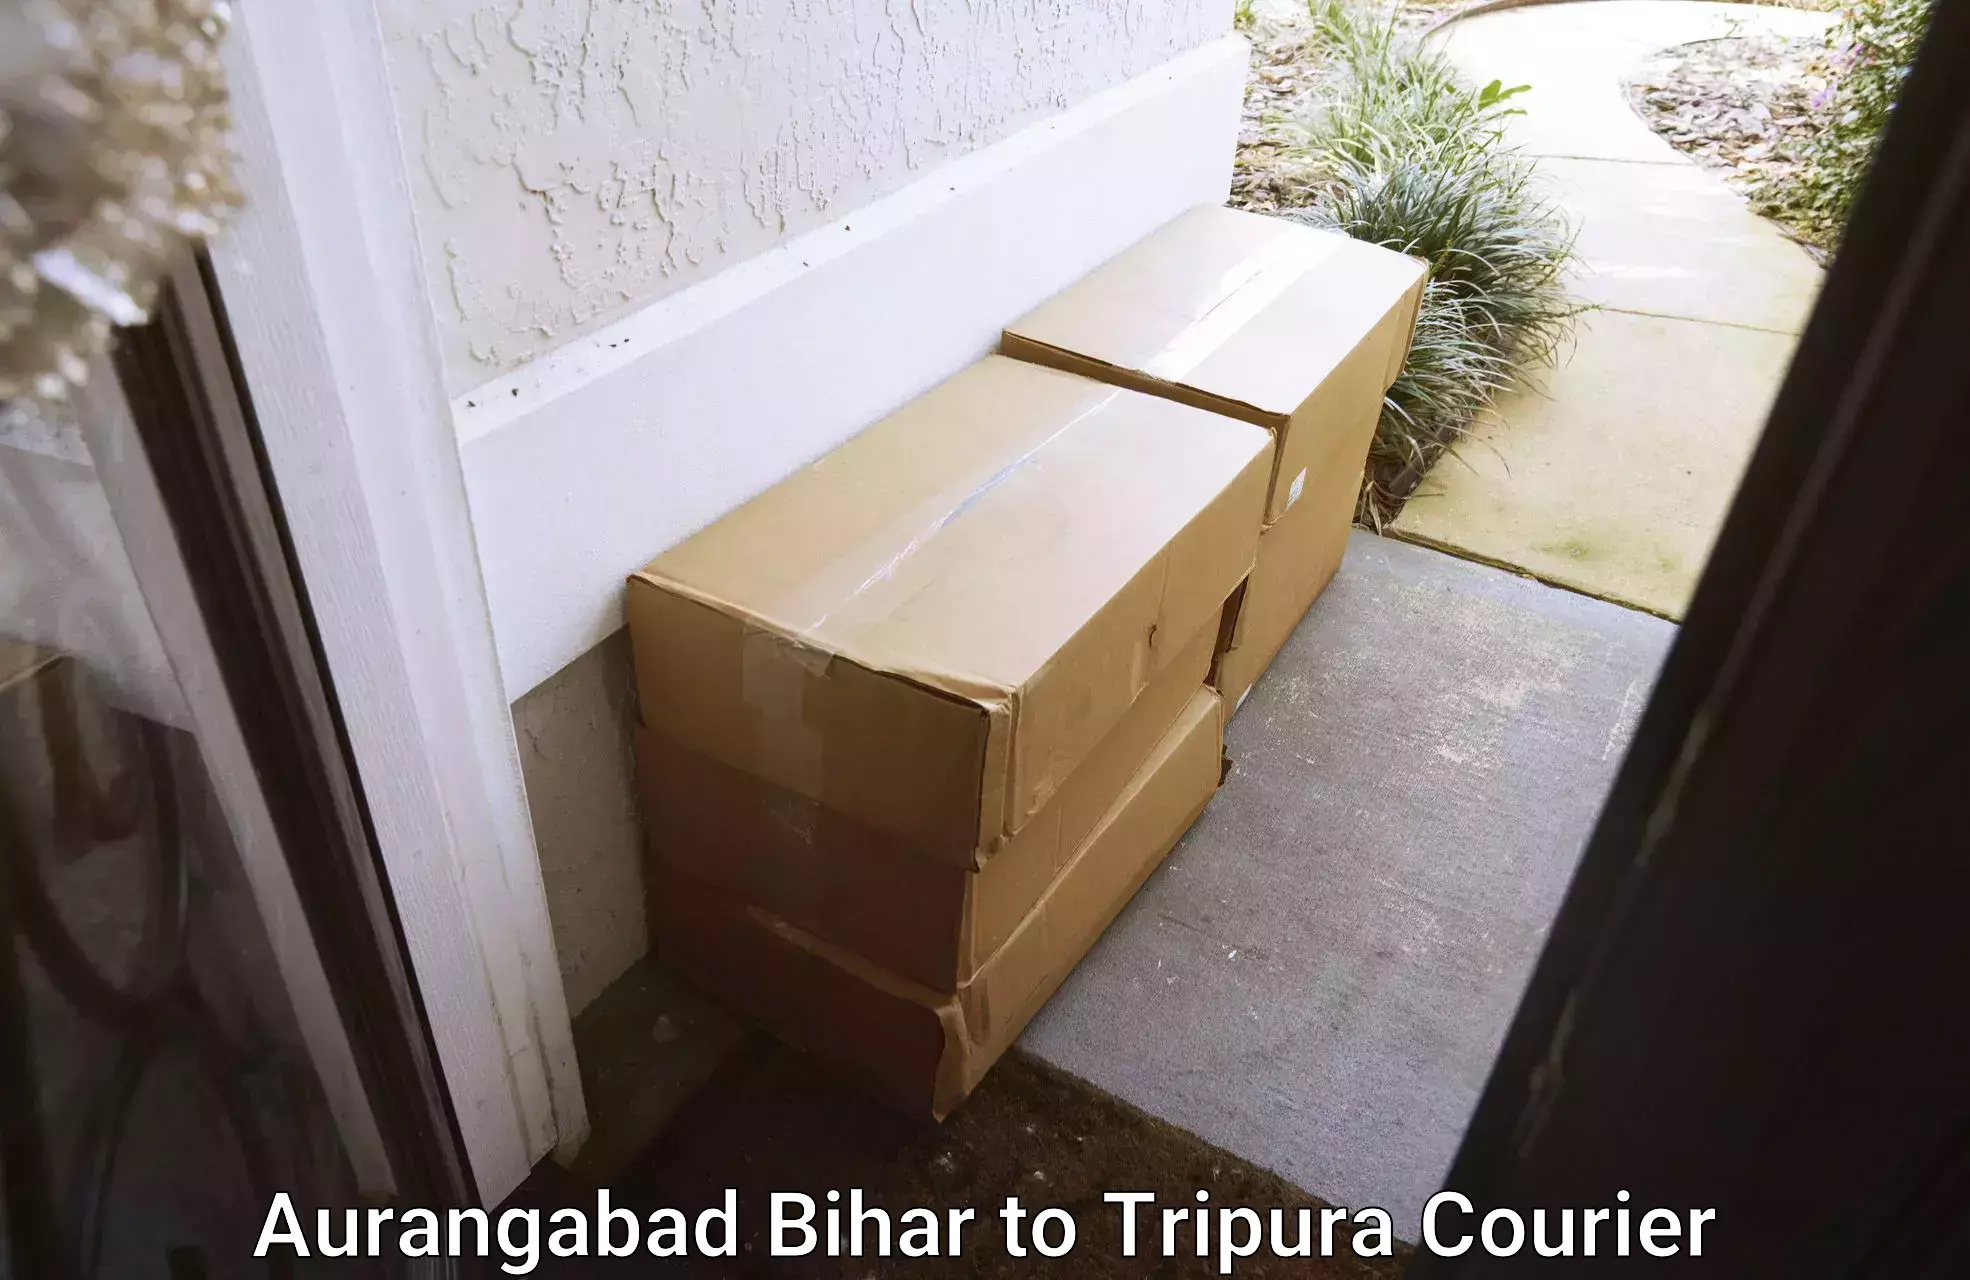 Home relocation experts Aurangabad Bihar to North Tripura